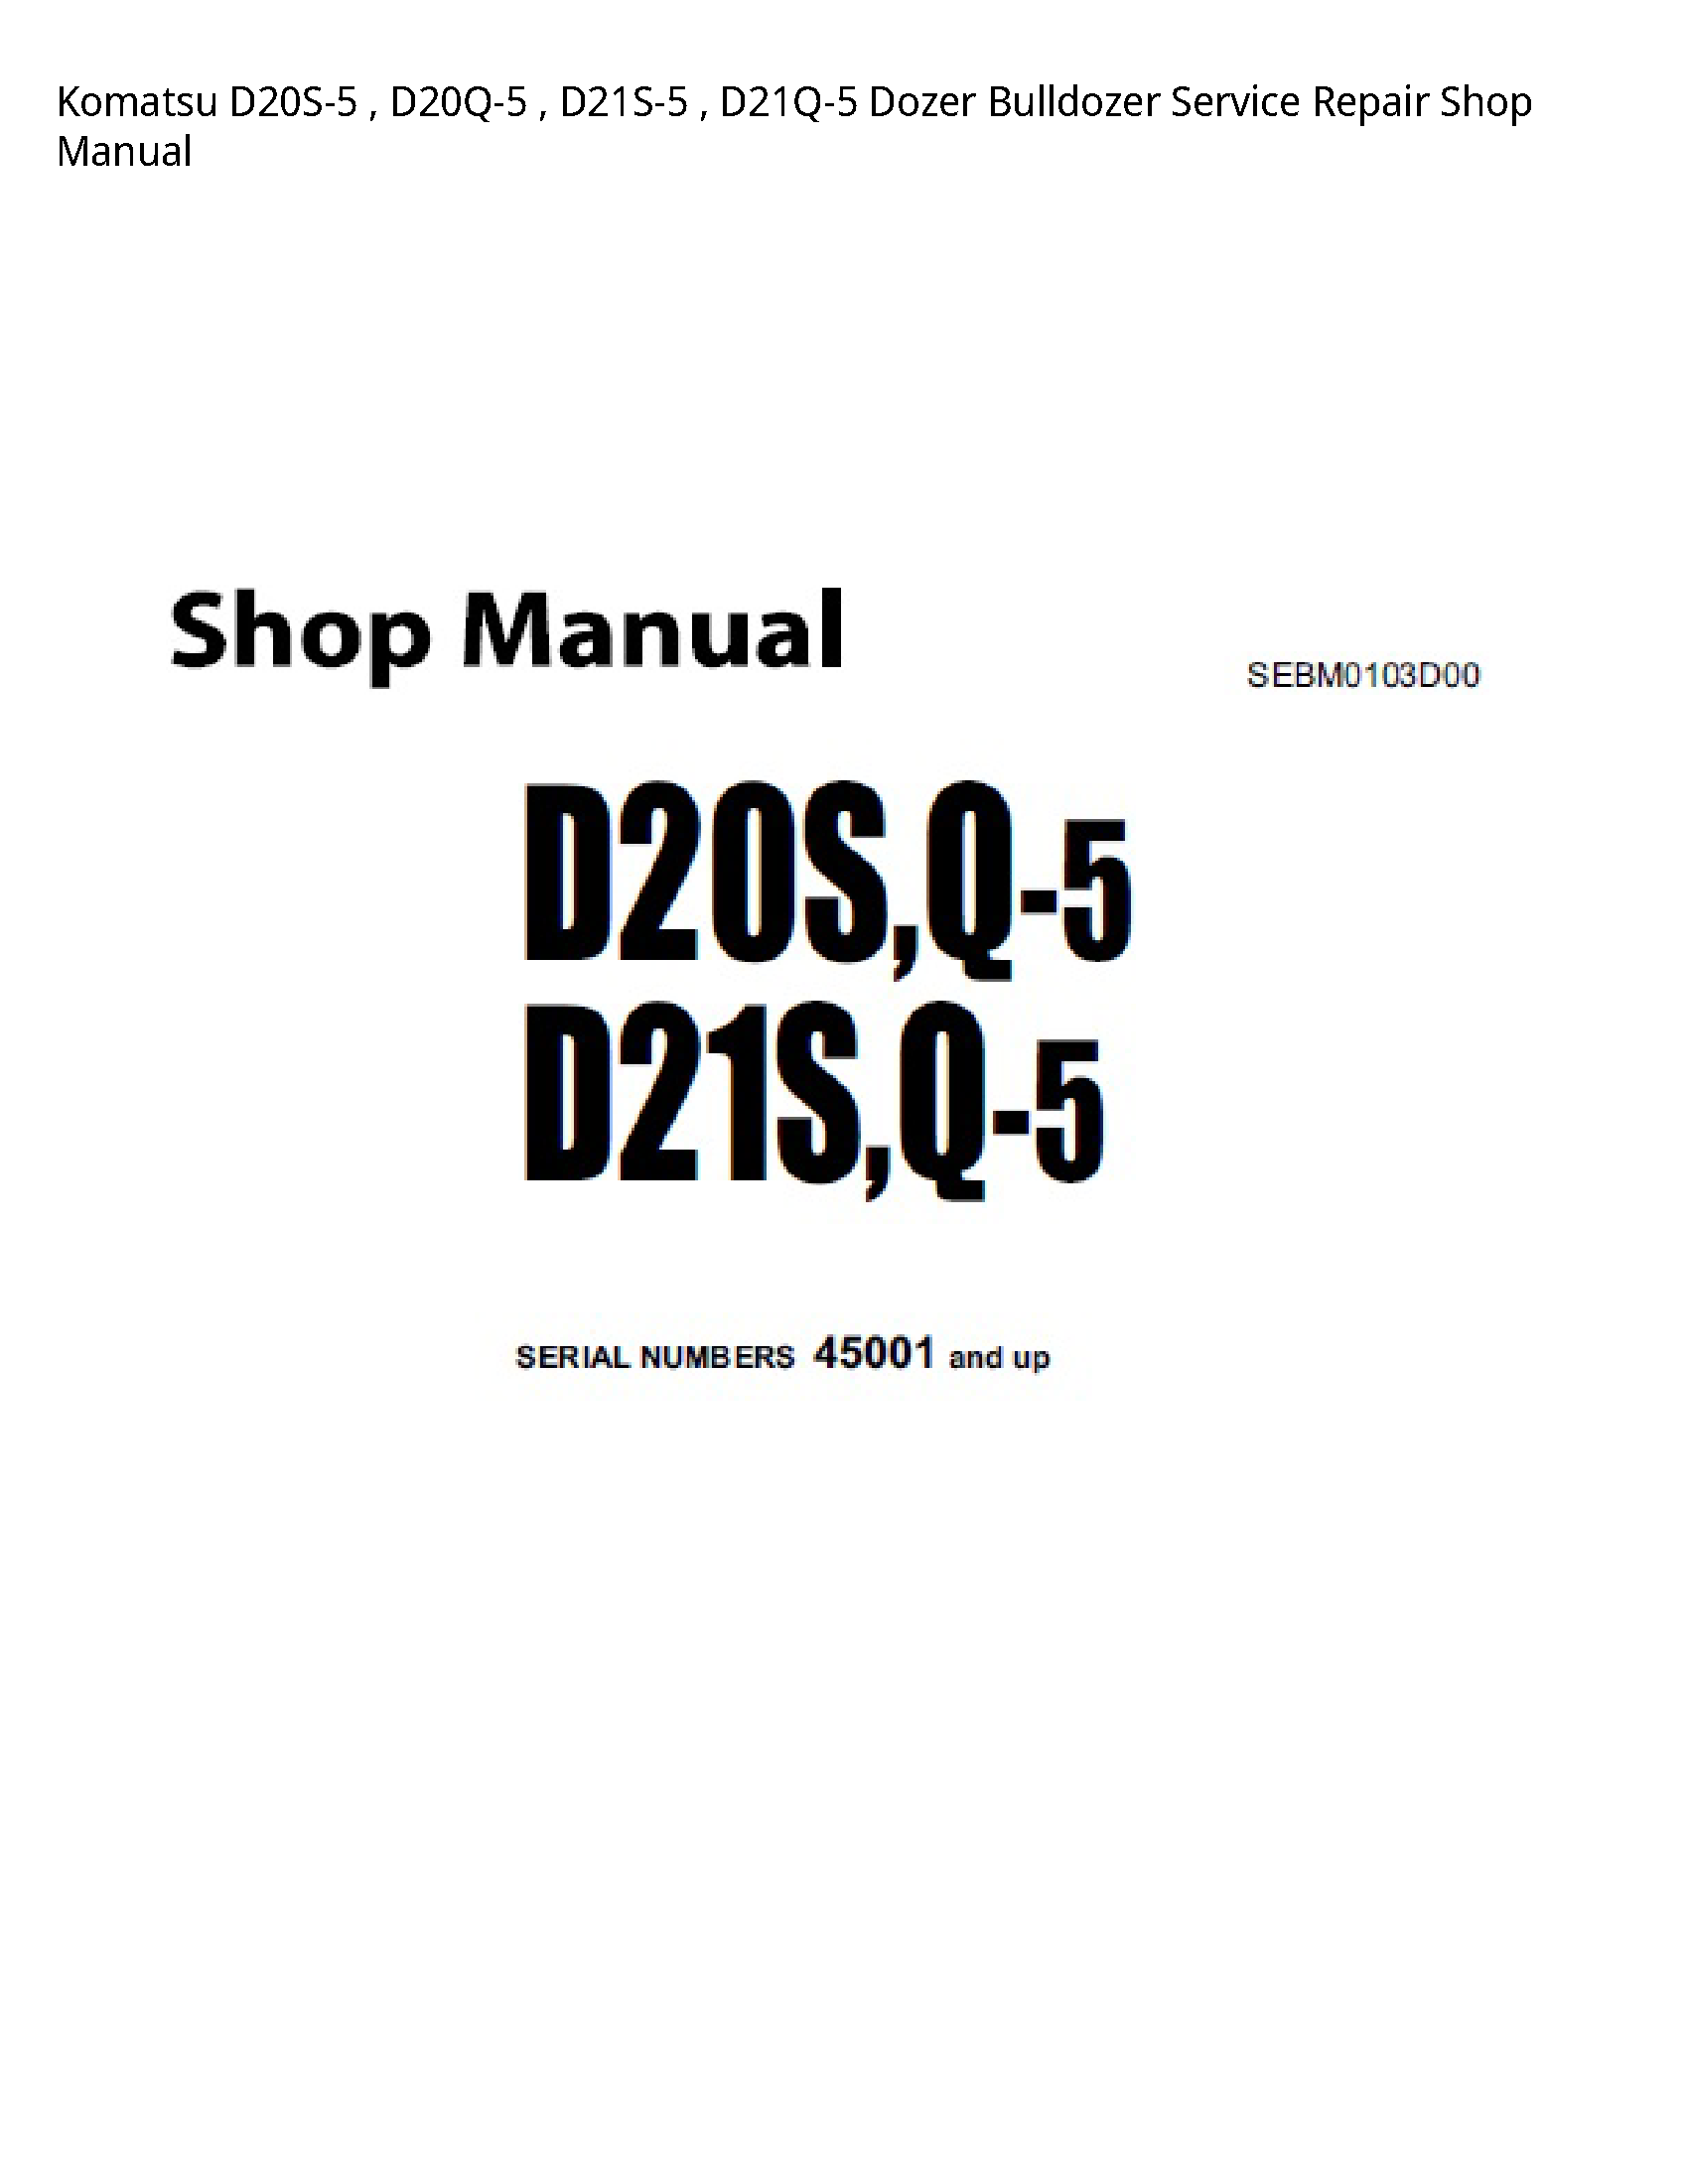 KOMATSU D20S-5 Dozer Bulldozer manual